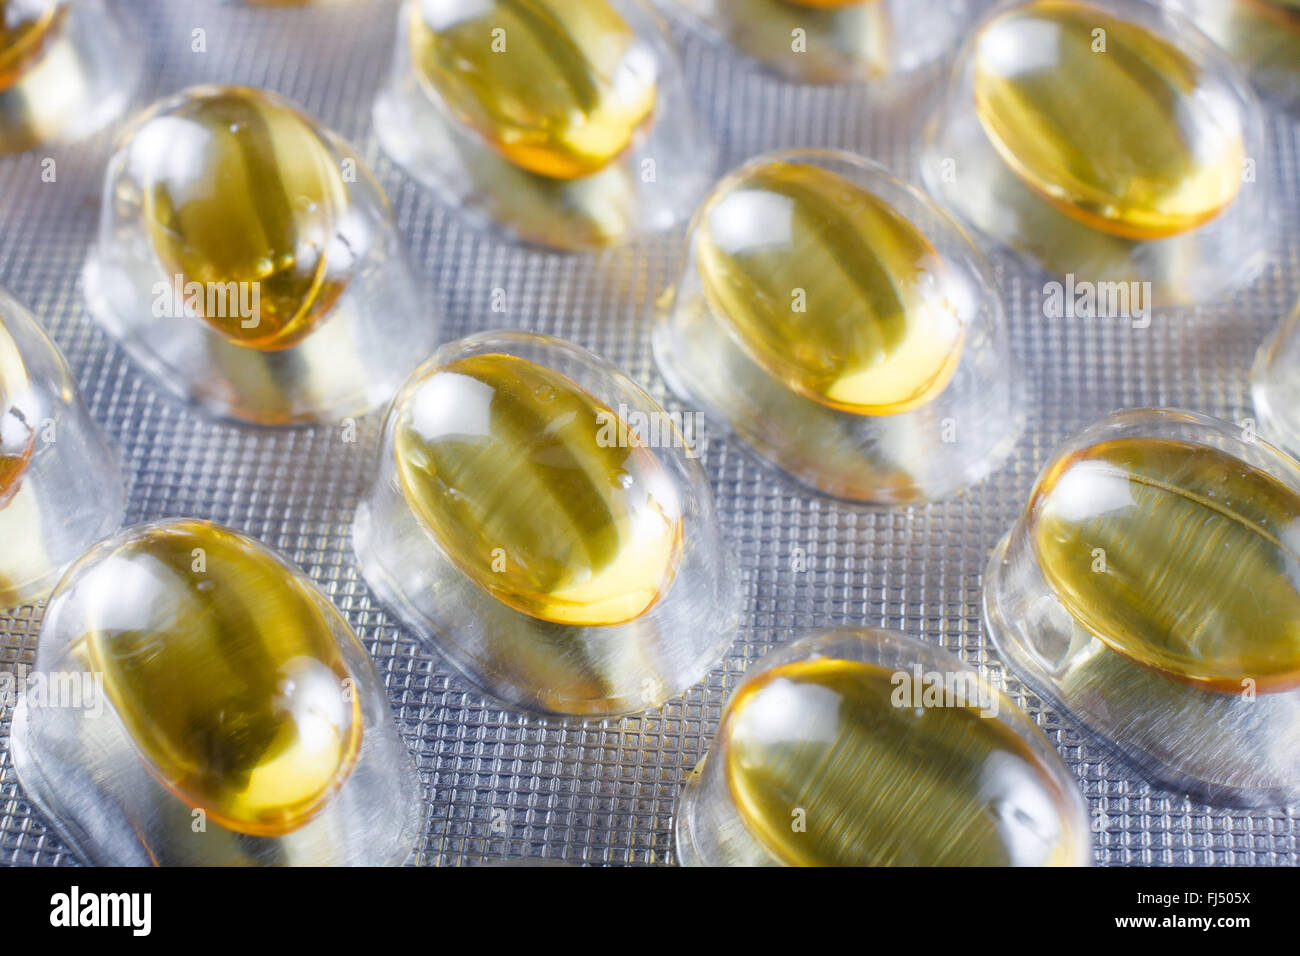 Cod Liver Oil Capsules, Omega 3, Vitamin D blister packed Stock Photo